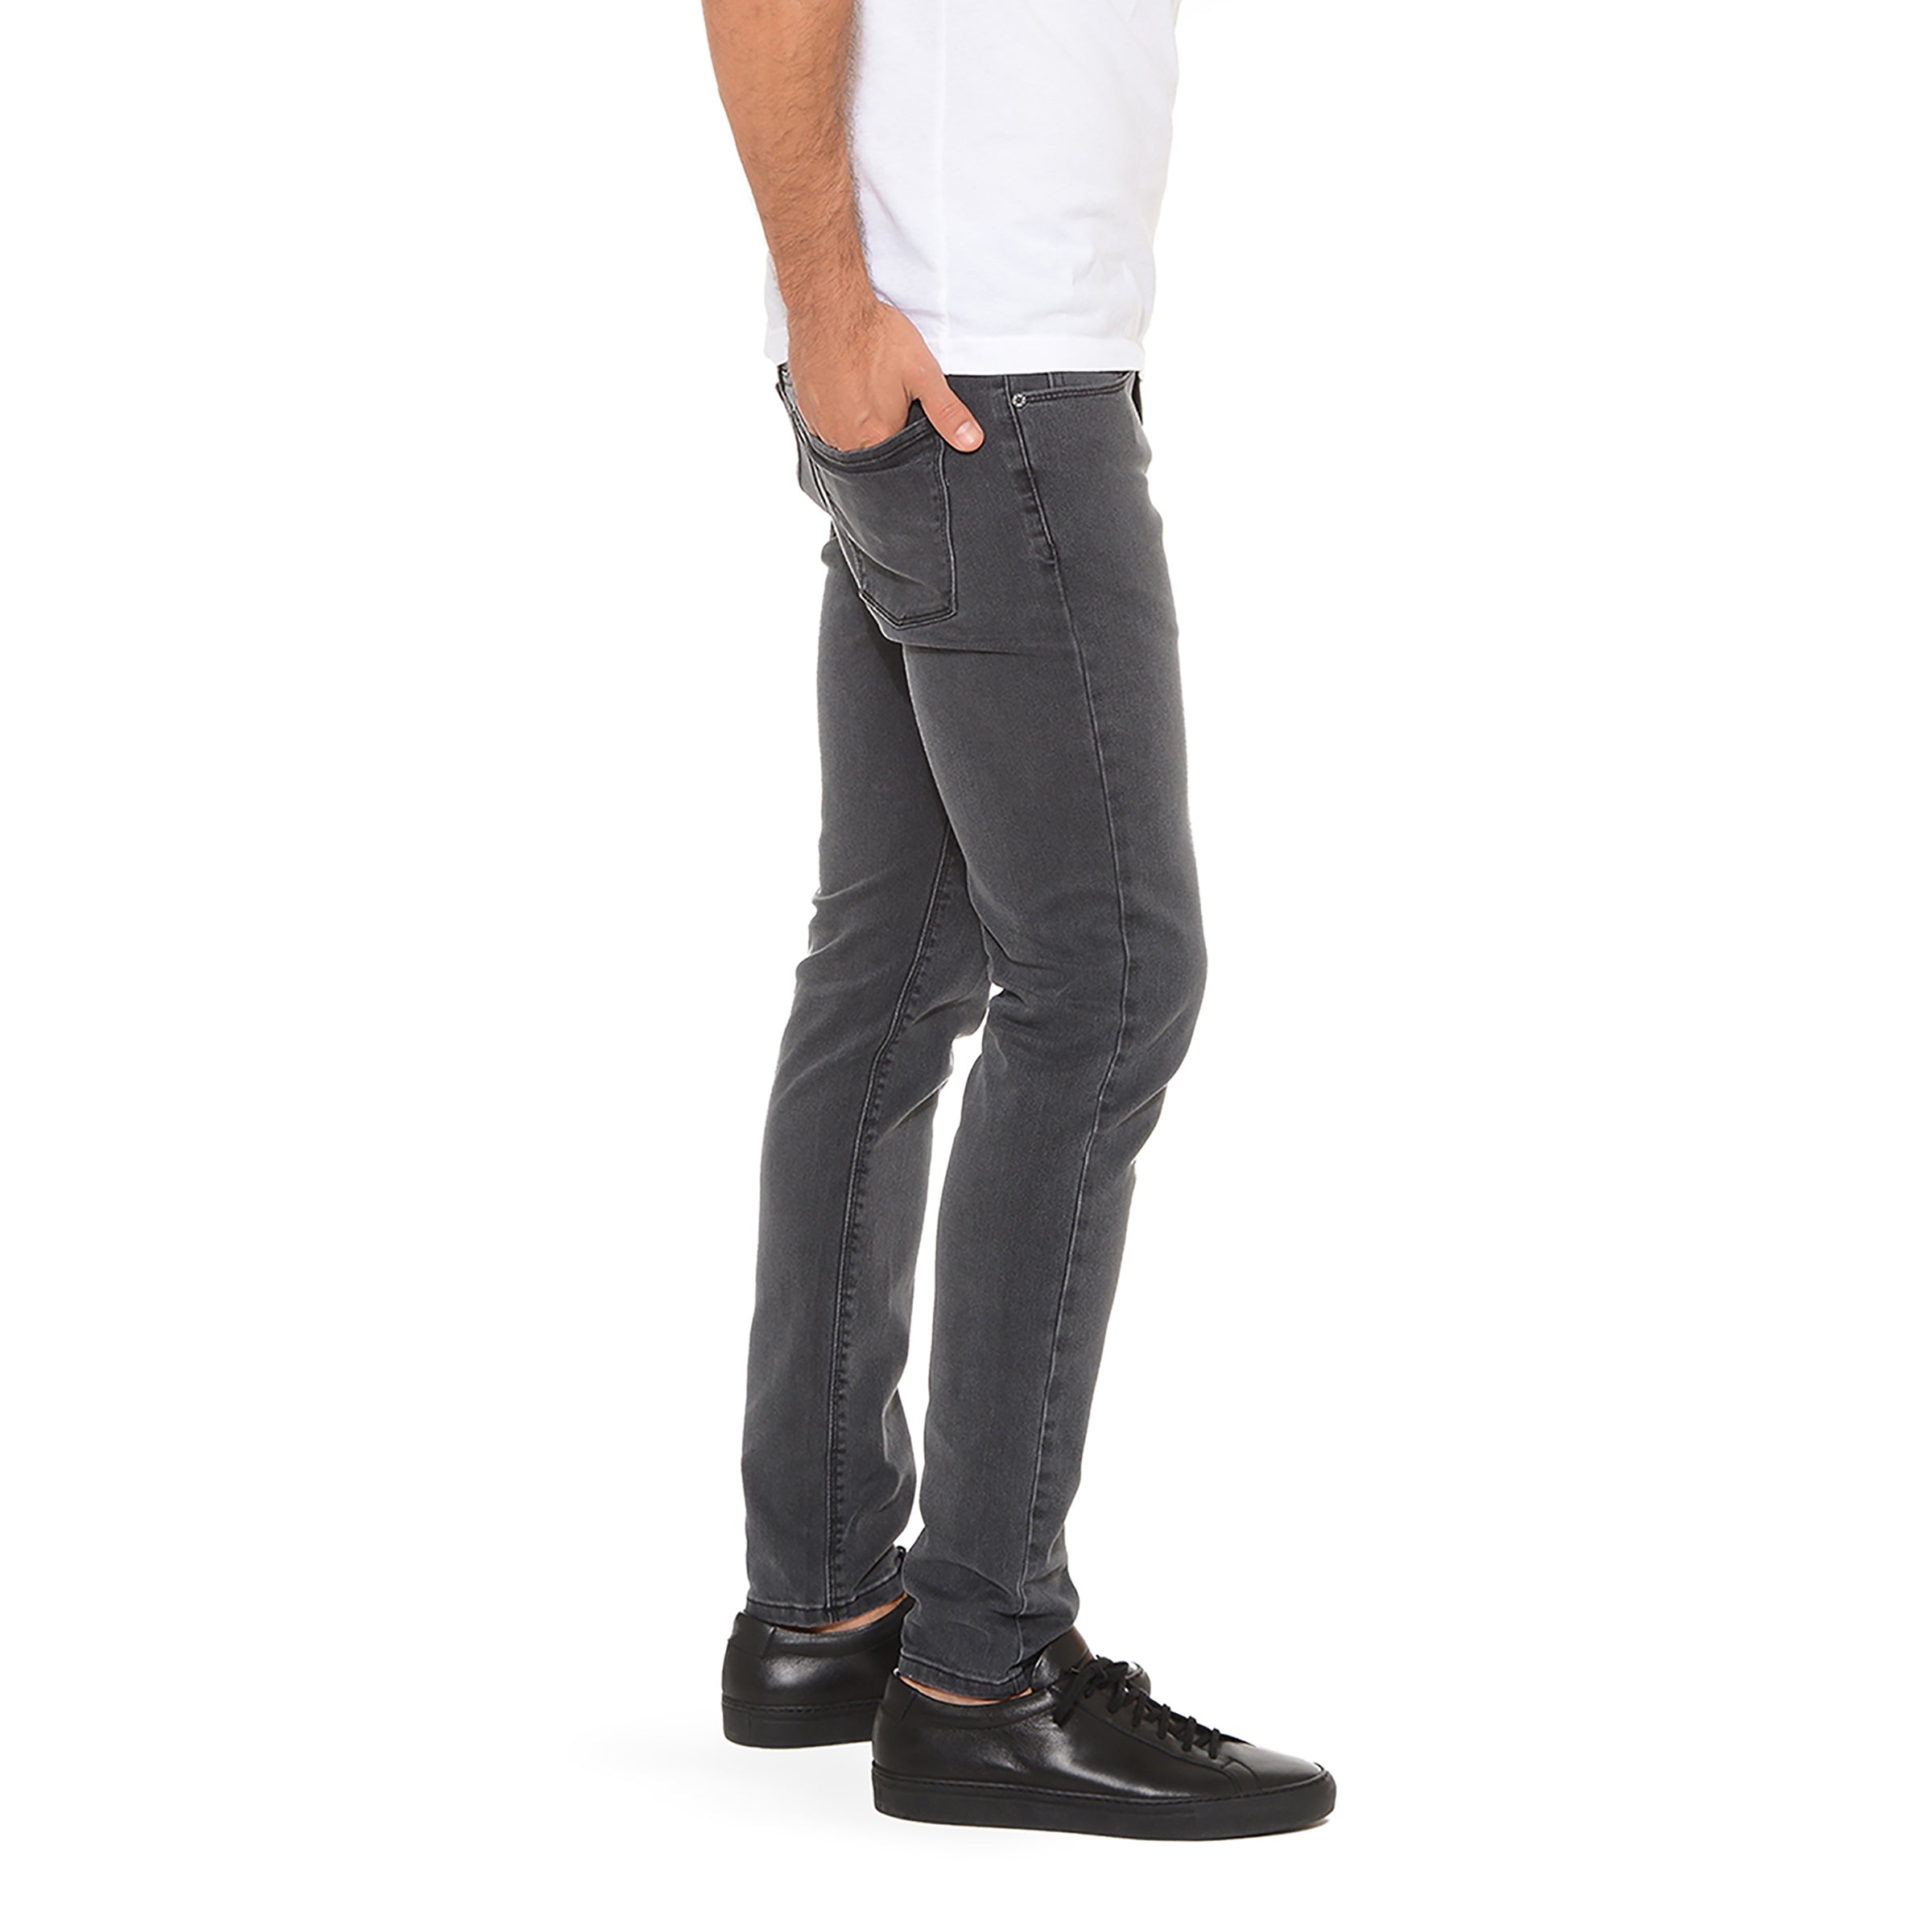 Men wearing Gris Médium Skinny Stone Jeans